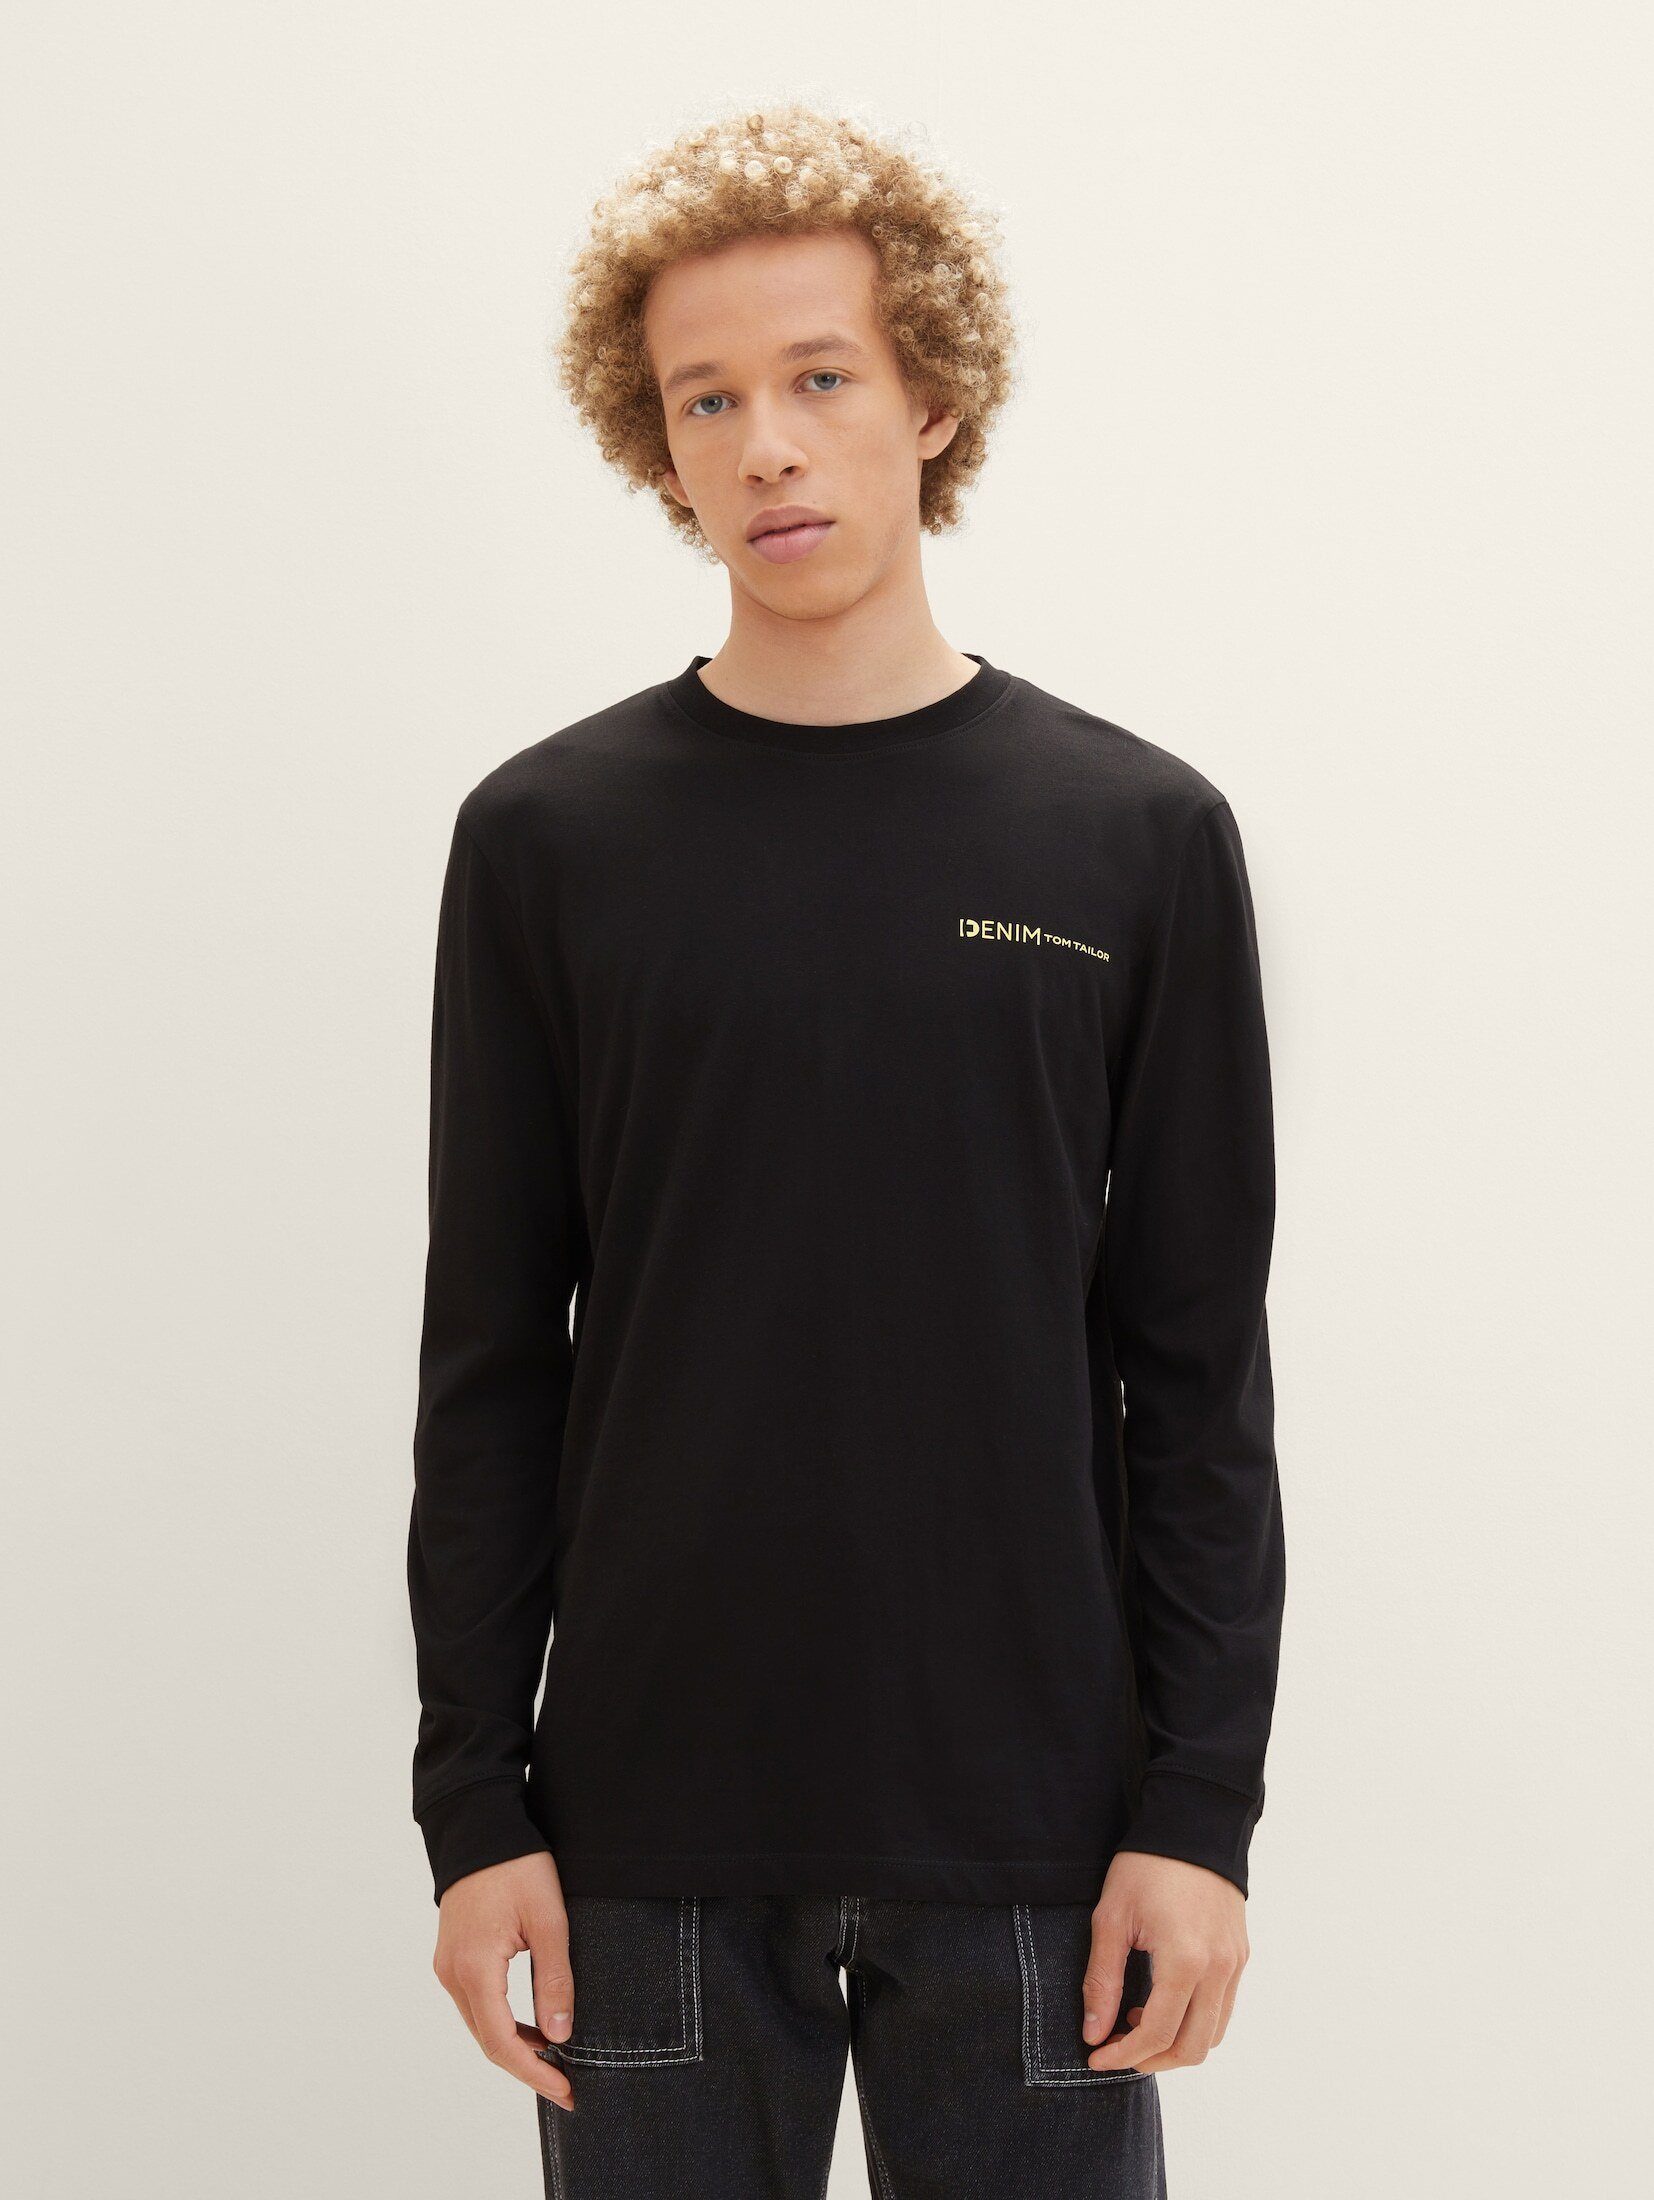 TOM TAILOR Denim T-Shirt Sweatshirt mit Print